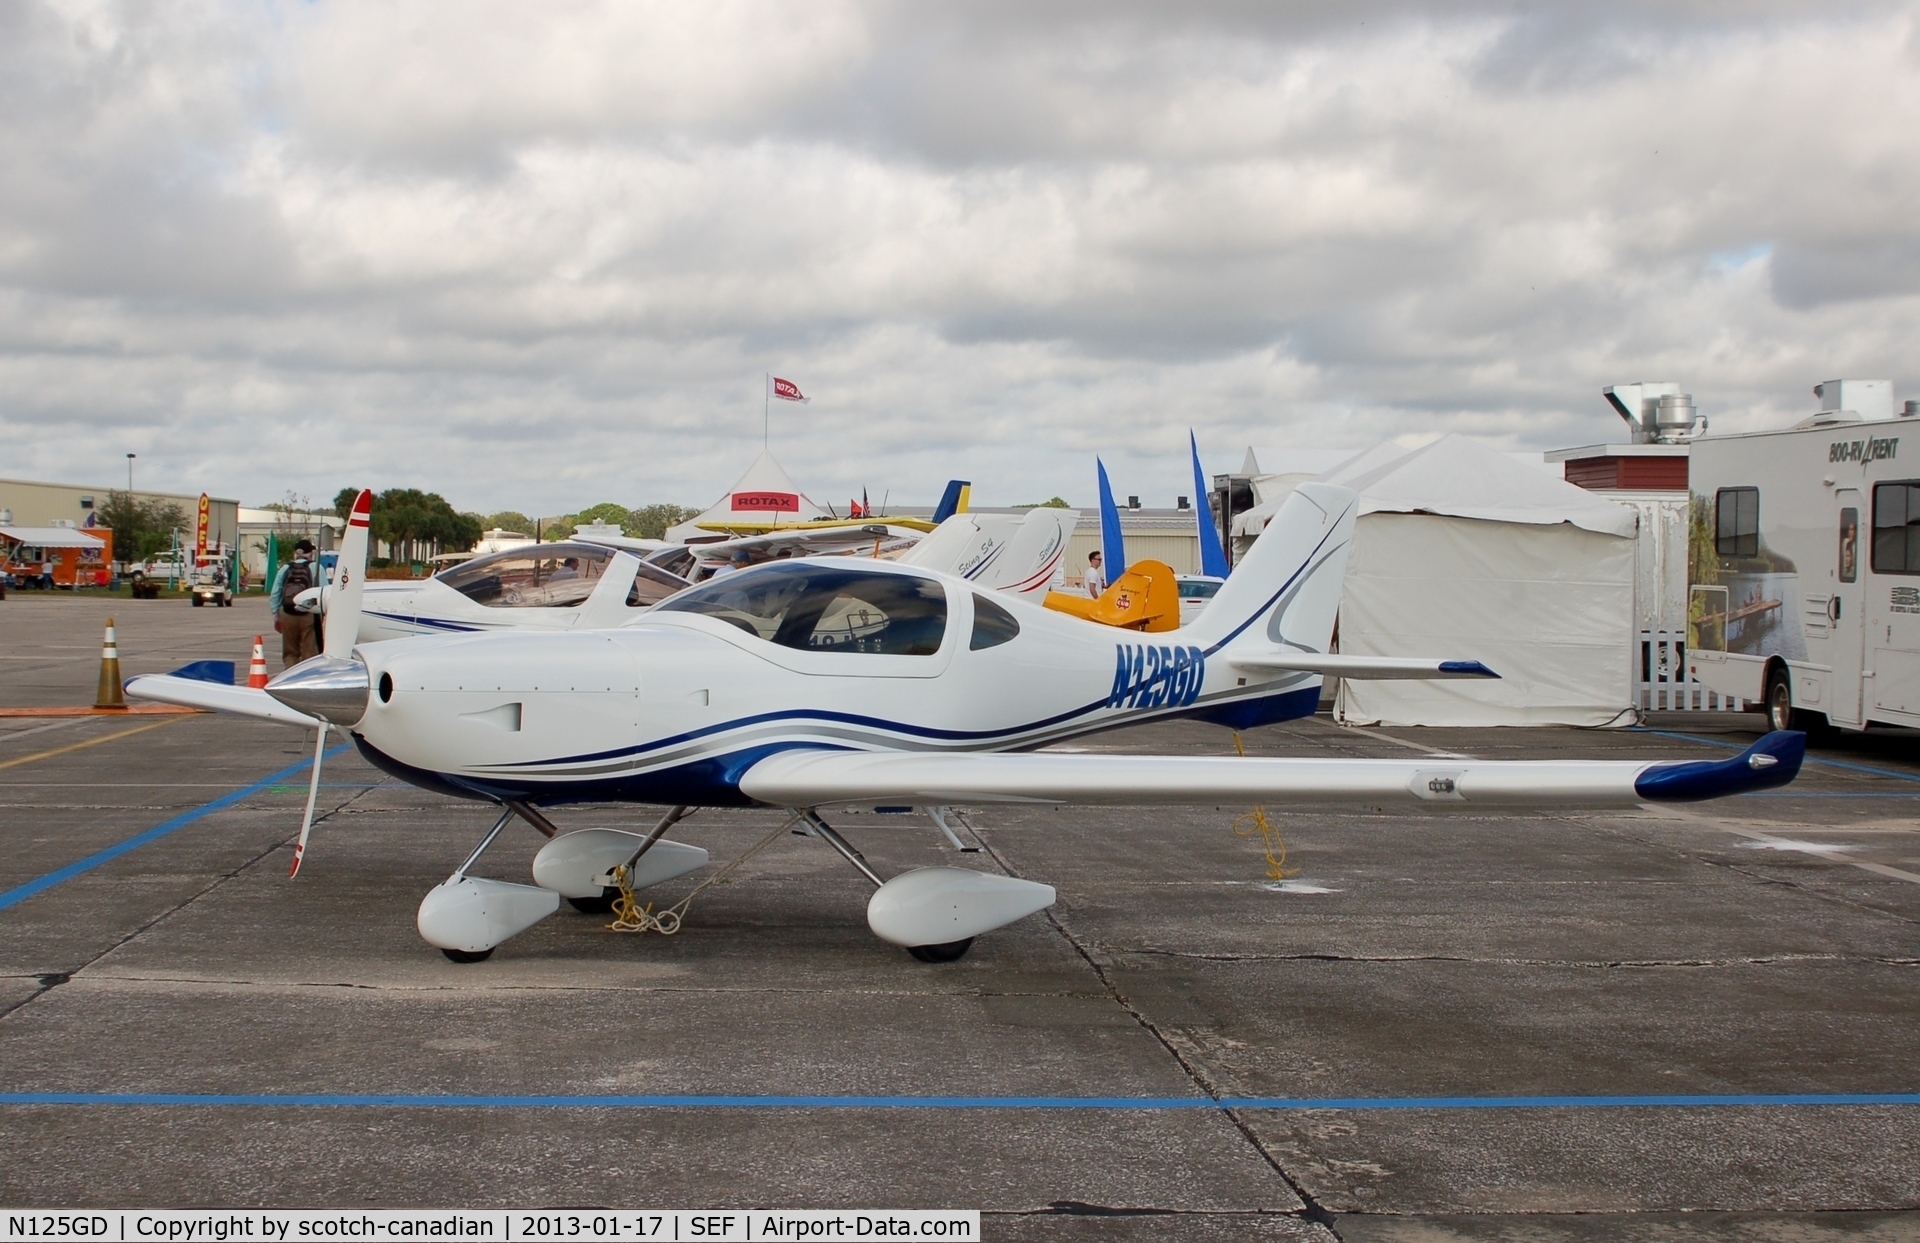 N125GD, Arion Lightning LS-1 C/N 105, Arion Aircraft Llc LIGHTNING LS-1, N125GD, at the US Sport Aviation Expo, Sebring Regional Airport, Sebring, FL